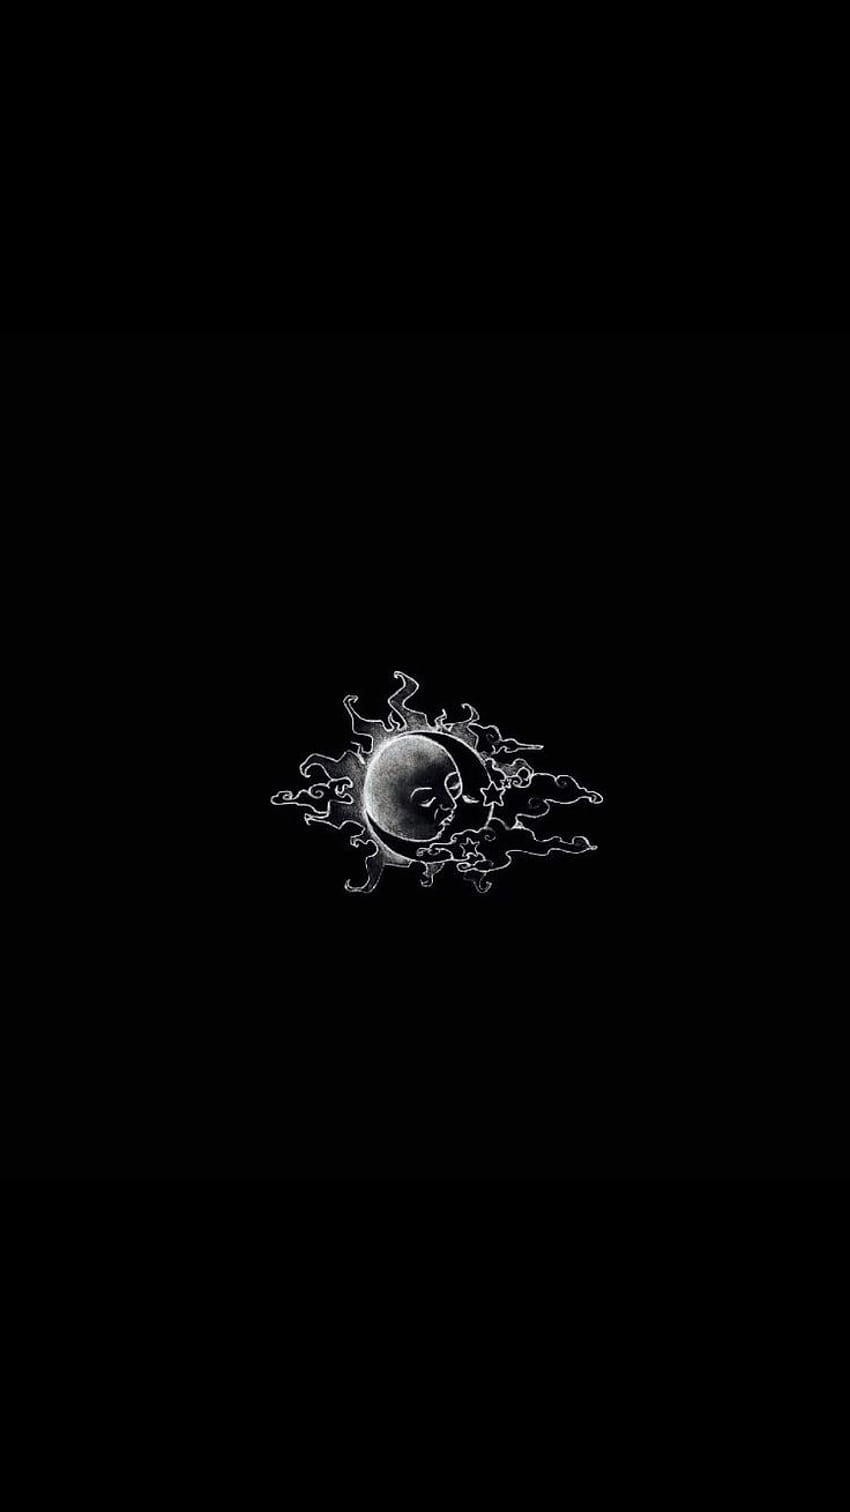 IPhone wallpaper of a black and white moon - Dark, dark phone